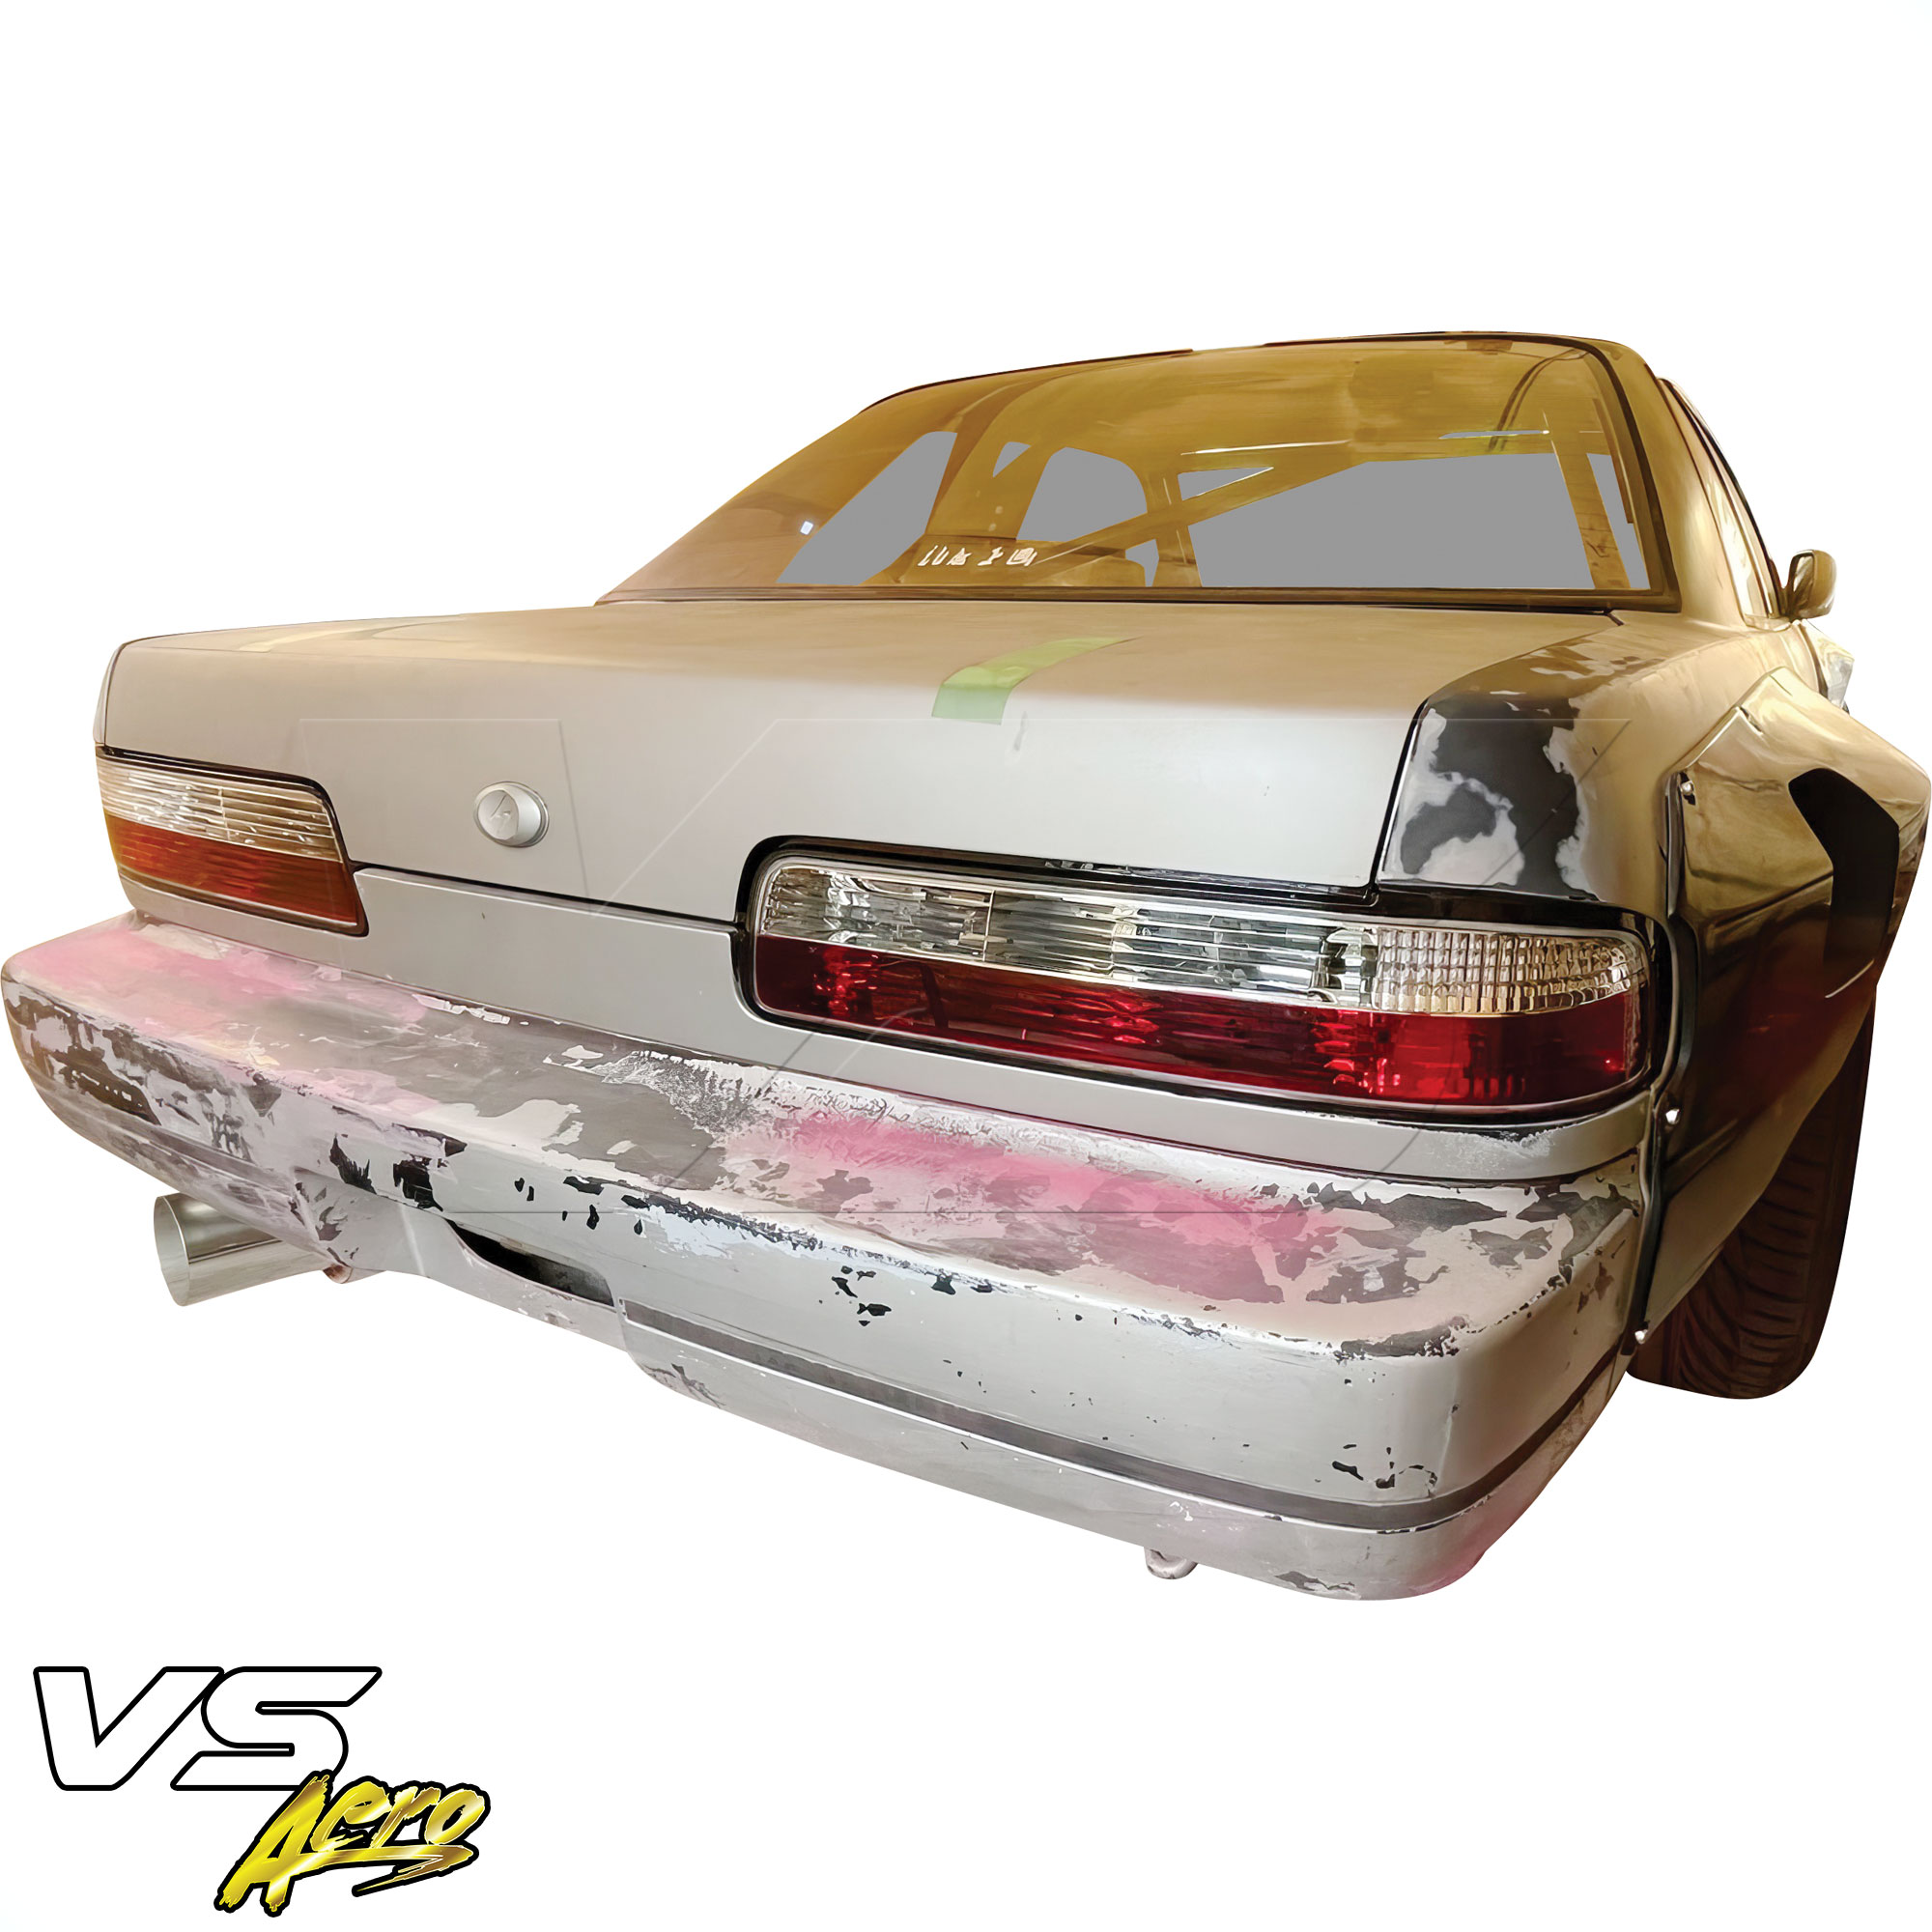 VSaero FRP TKYO v3 Wide Body 110mm Fenders (rear) > Nissan Silvia S13 1989-1994 > 2dr Coupe - Image 21